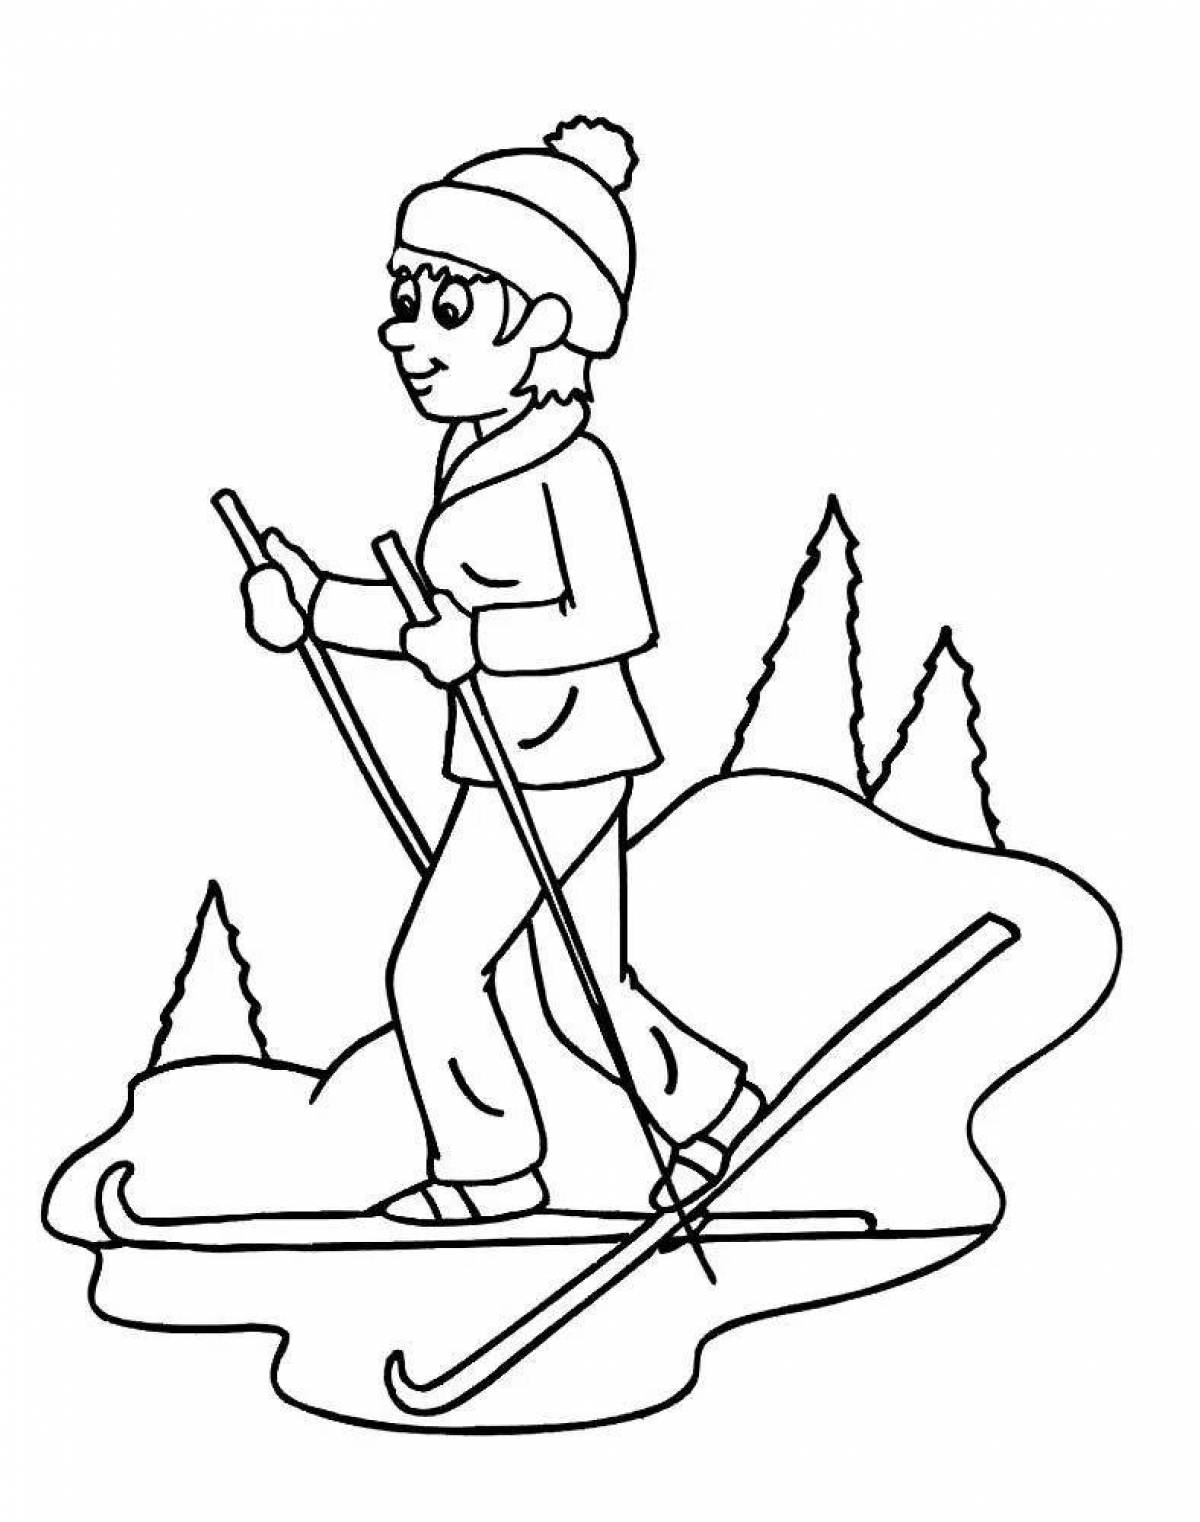 Fun family skiing coloring book